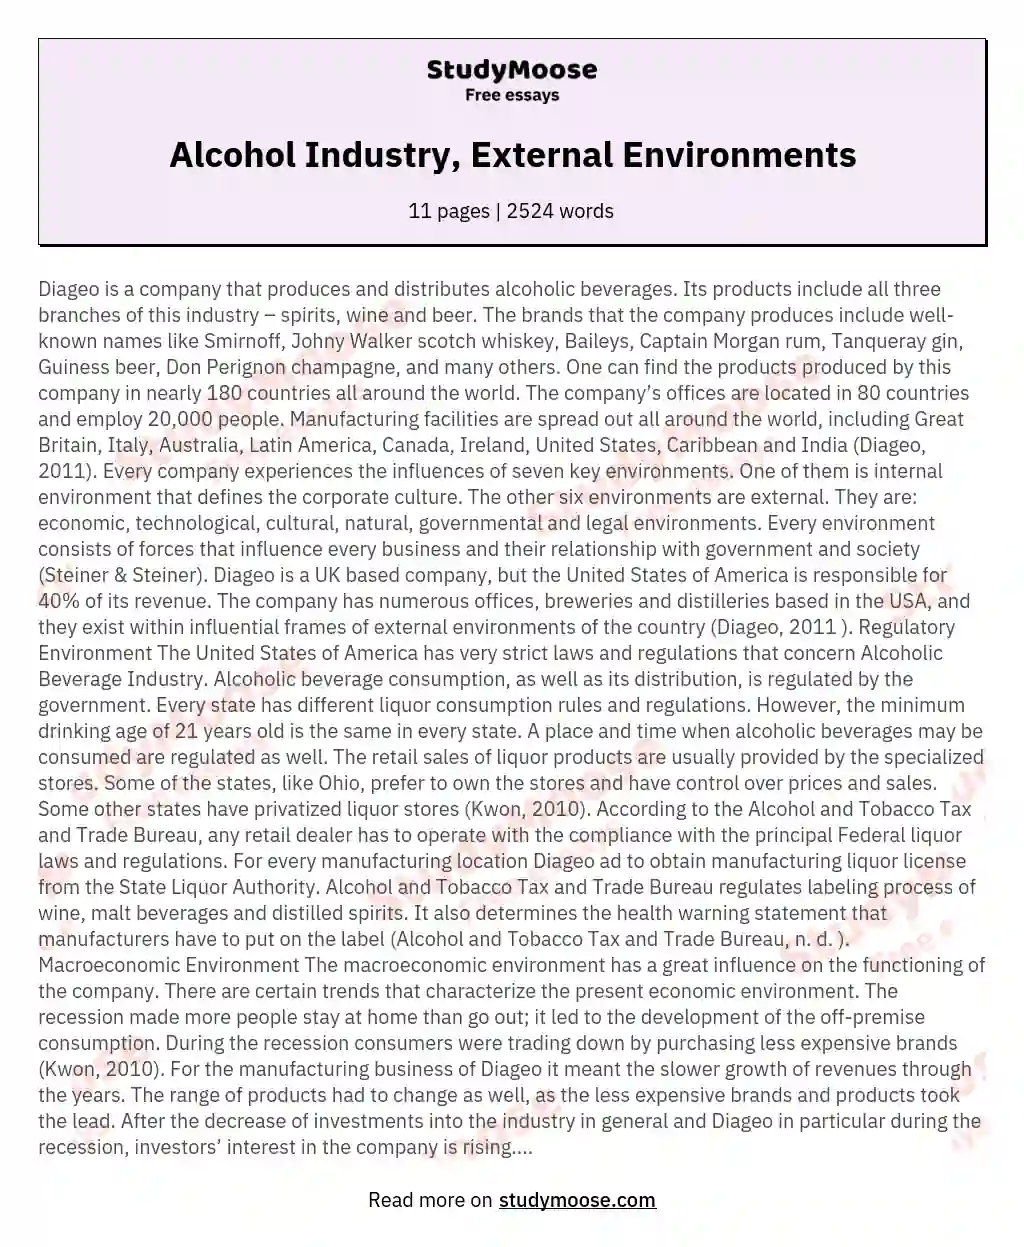 Alcohol Industry, External Environments essay